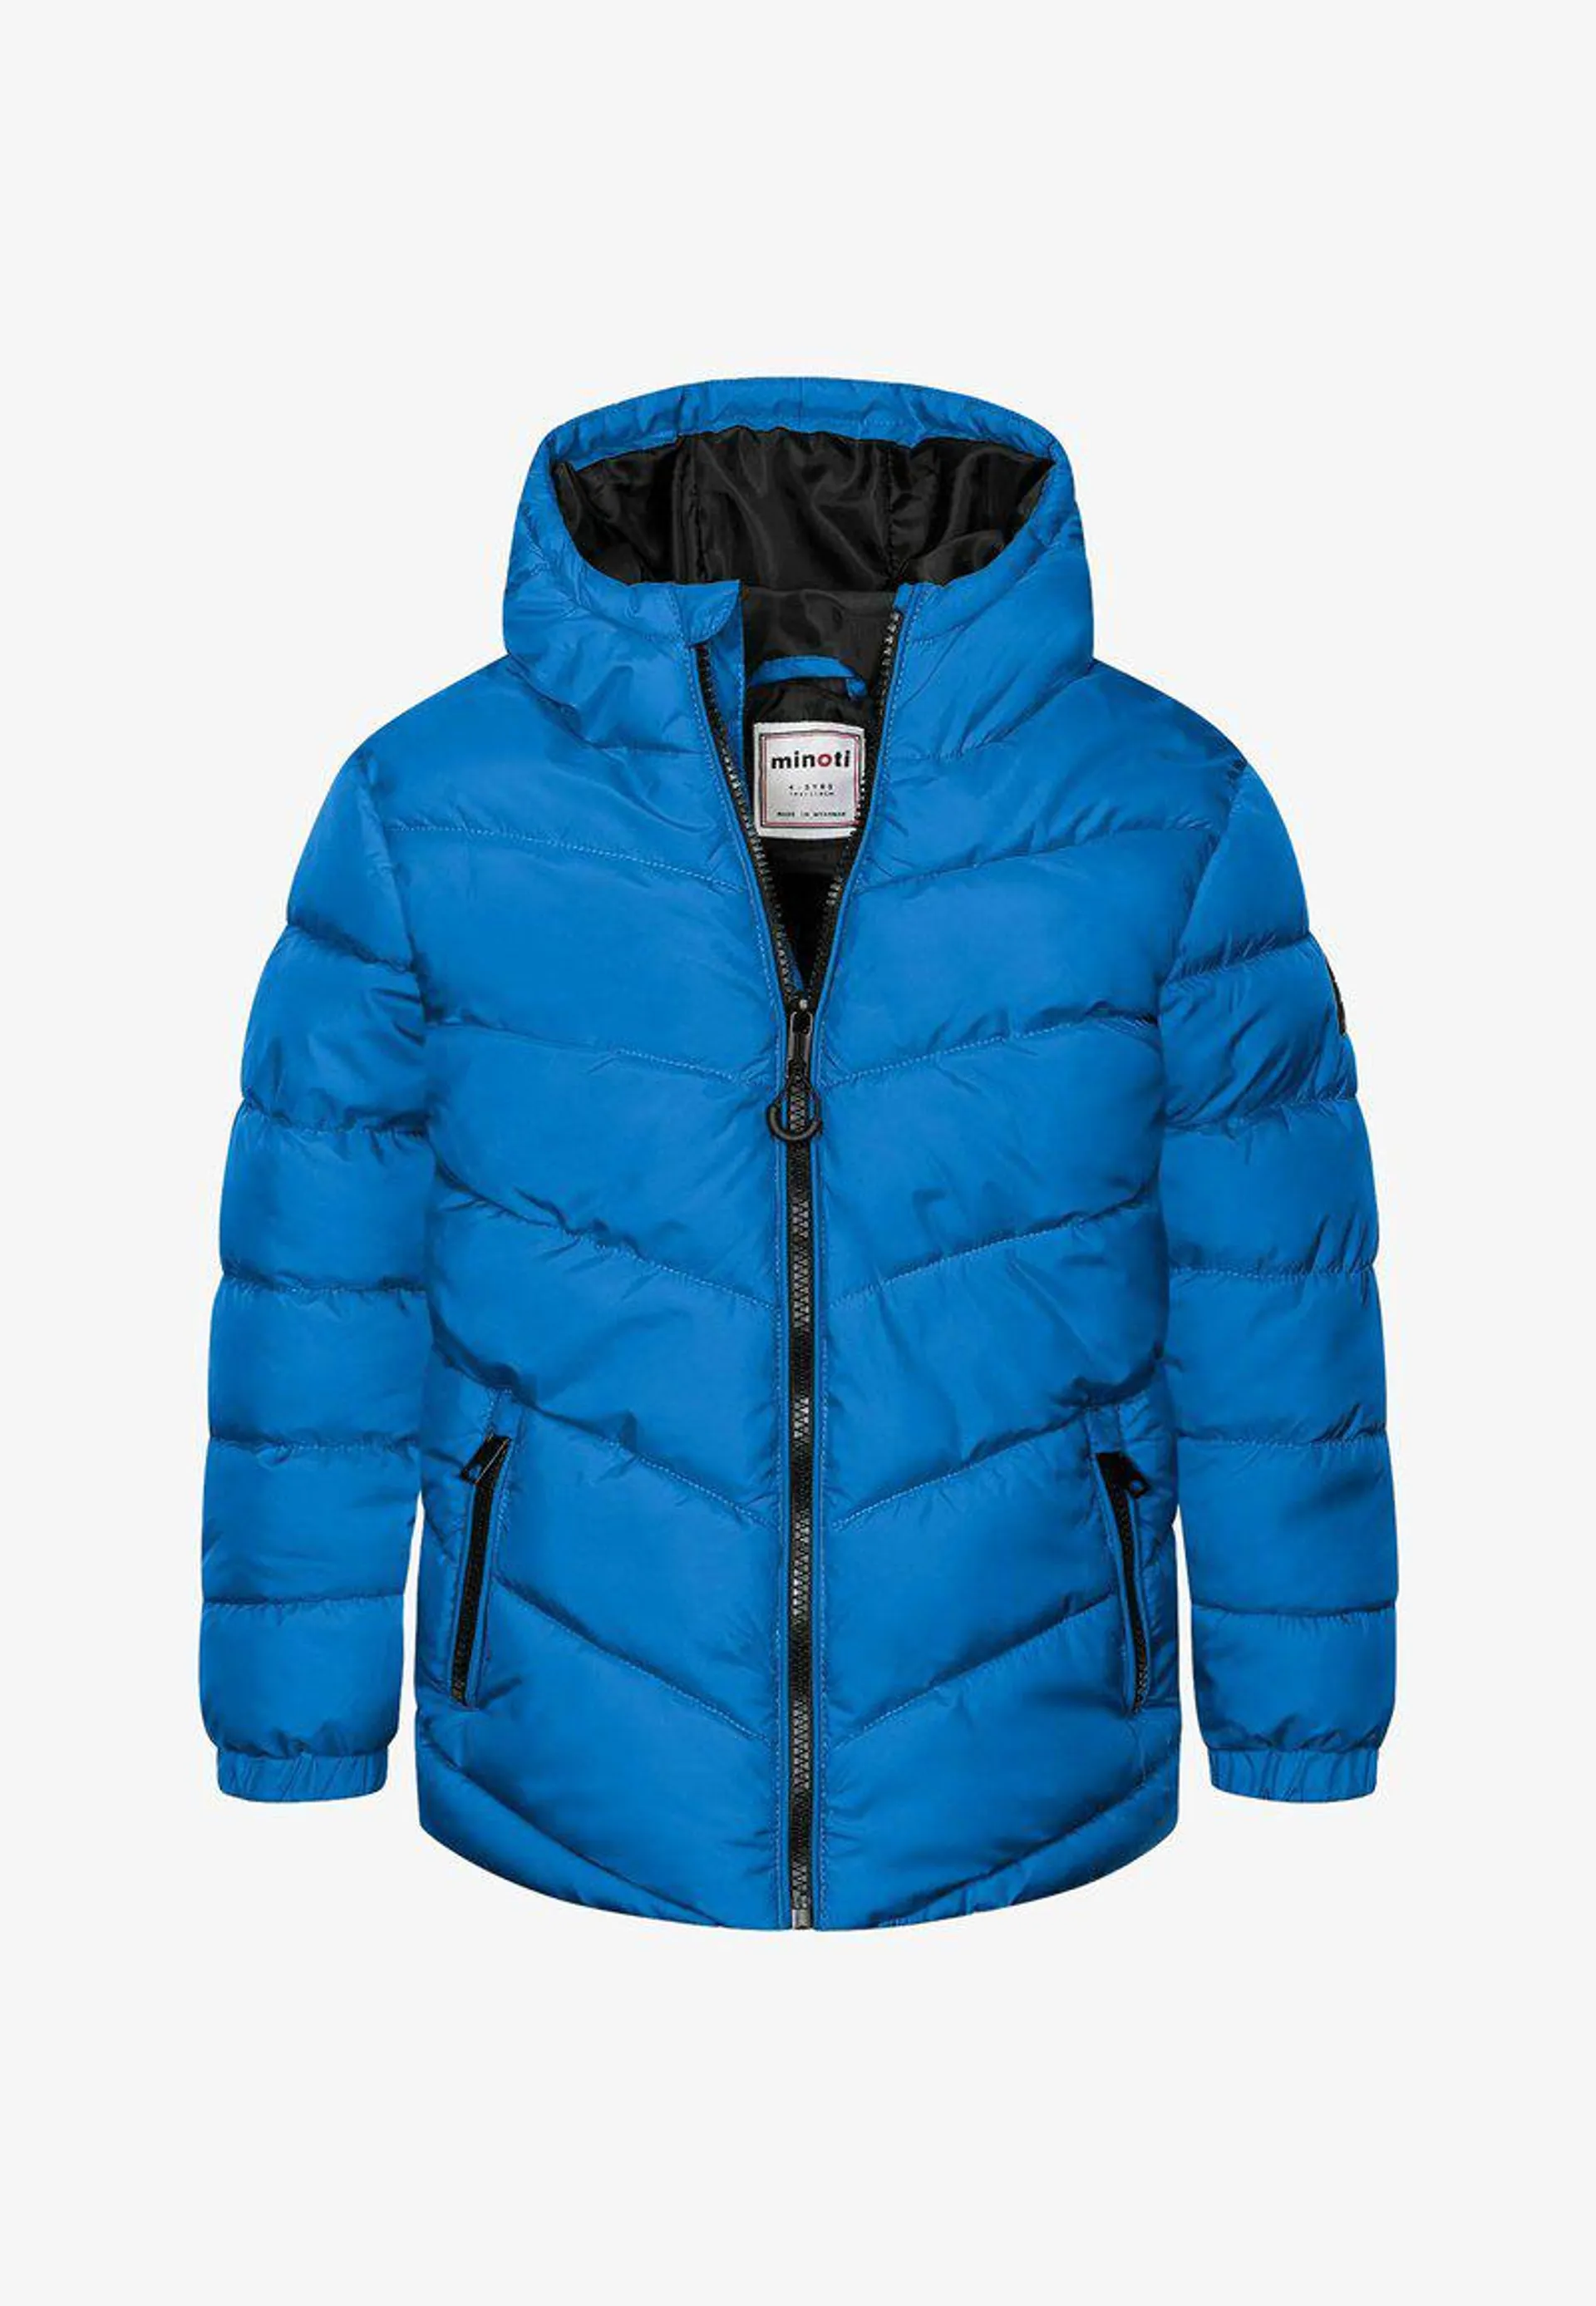 CHEVRON - Winter jacket